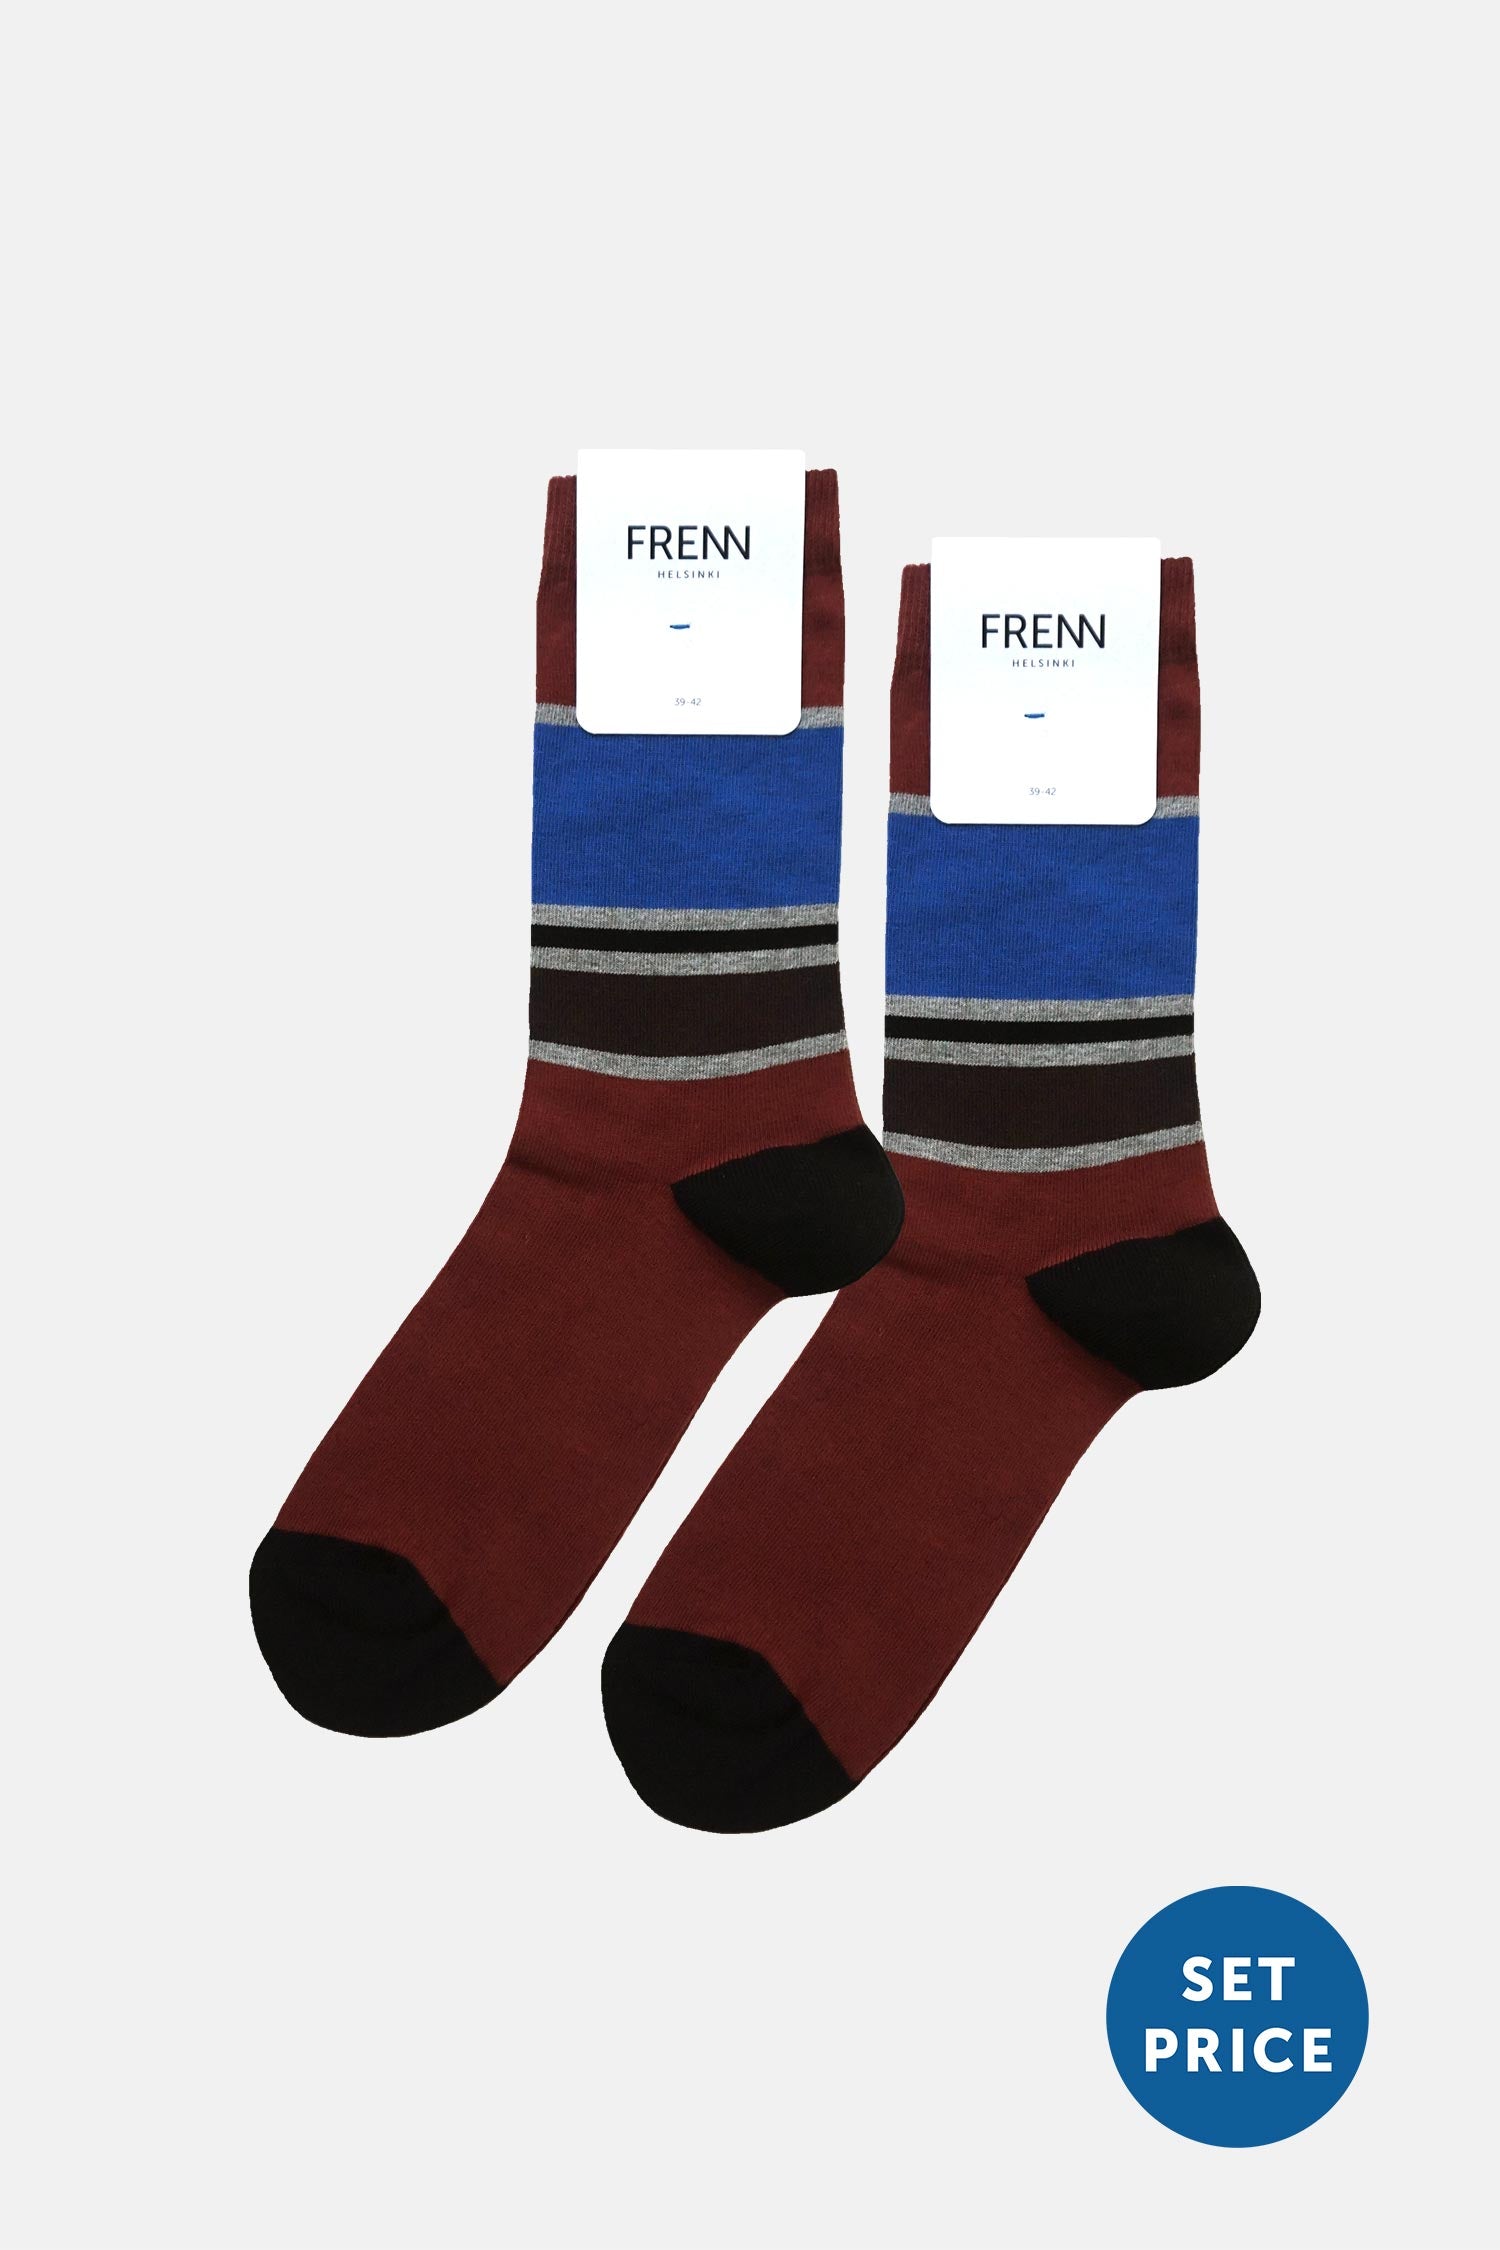 Frenn Urho sustainable premium quality Oeko-Tex certified cotton socks tile